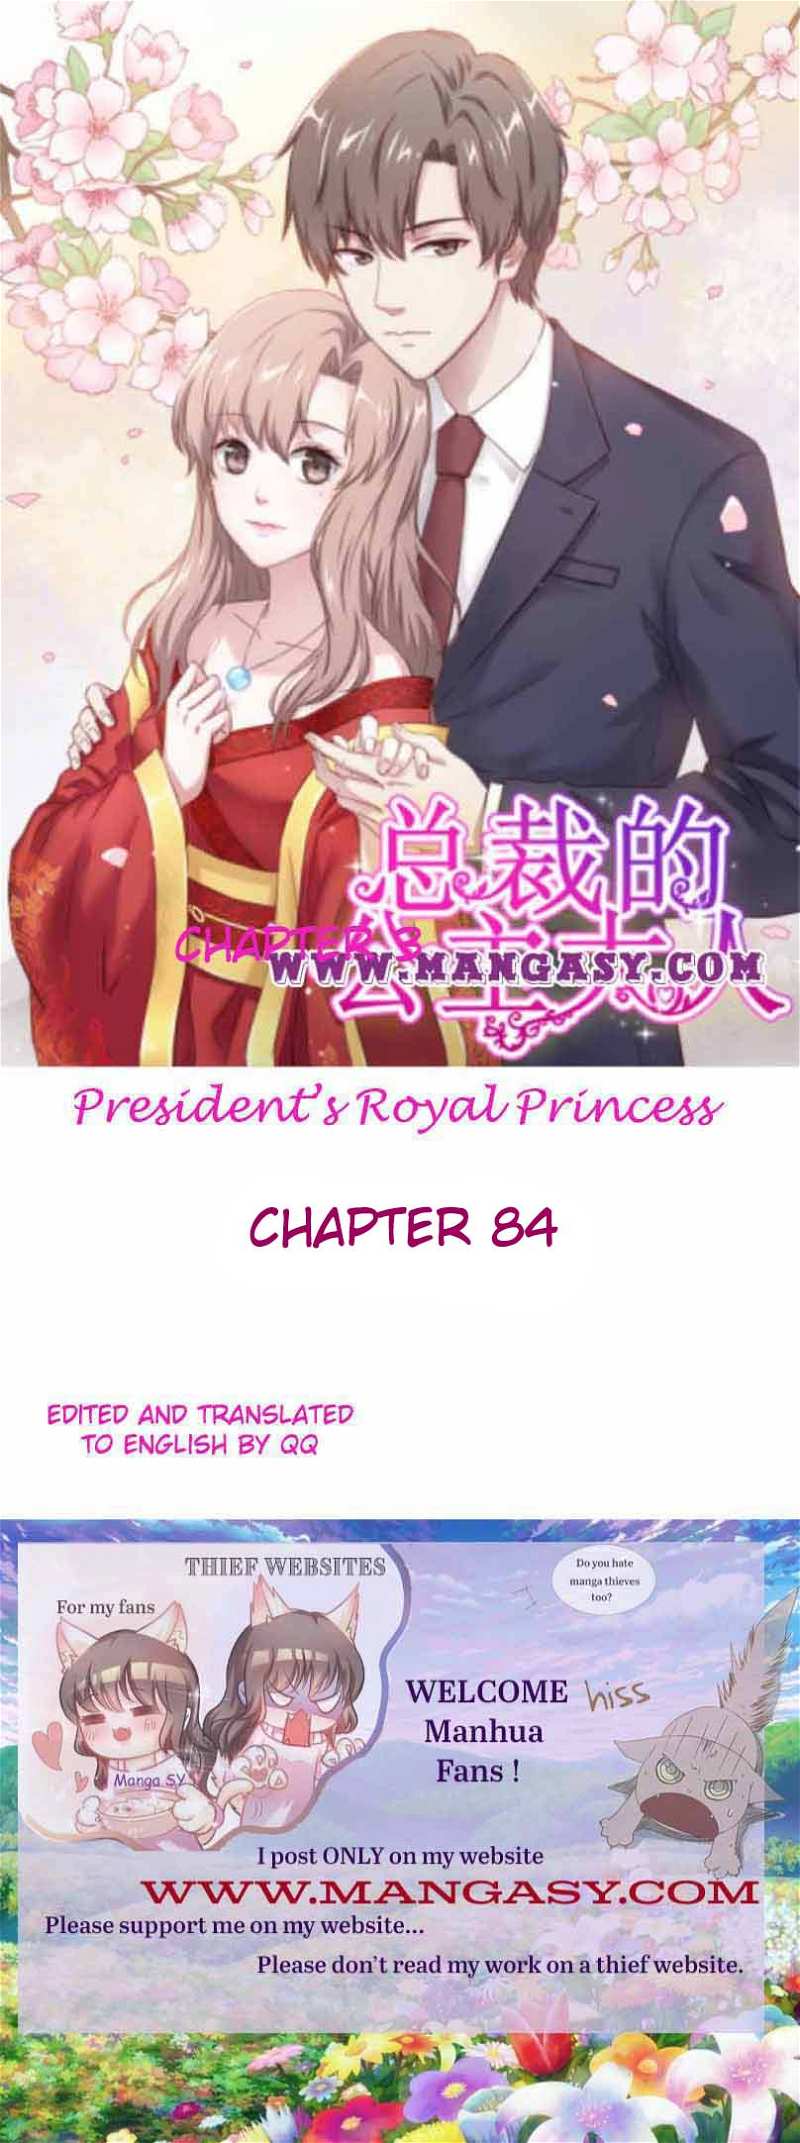 President’s Royal Princess Chapter 84 - page 1